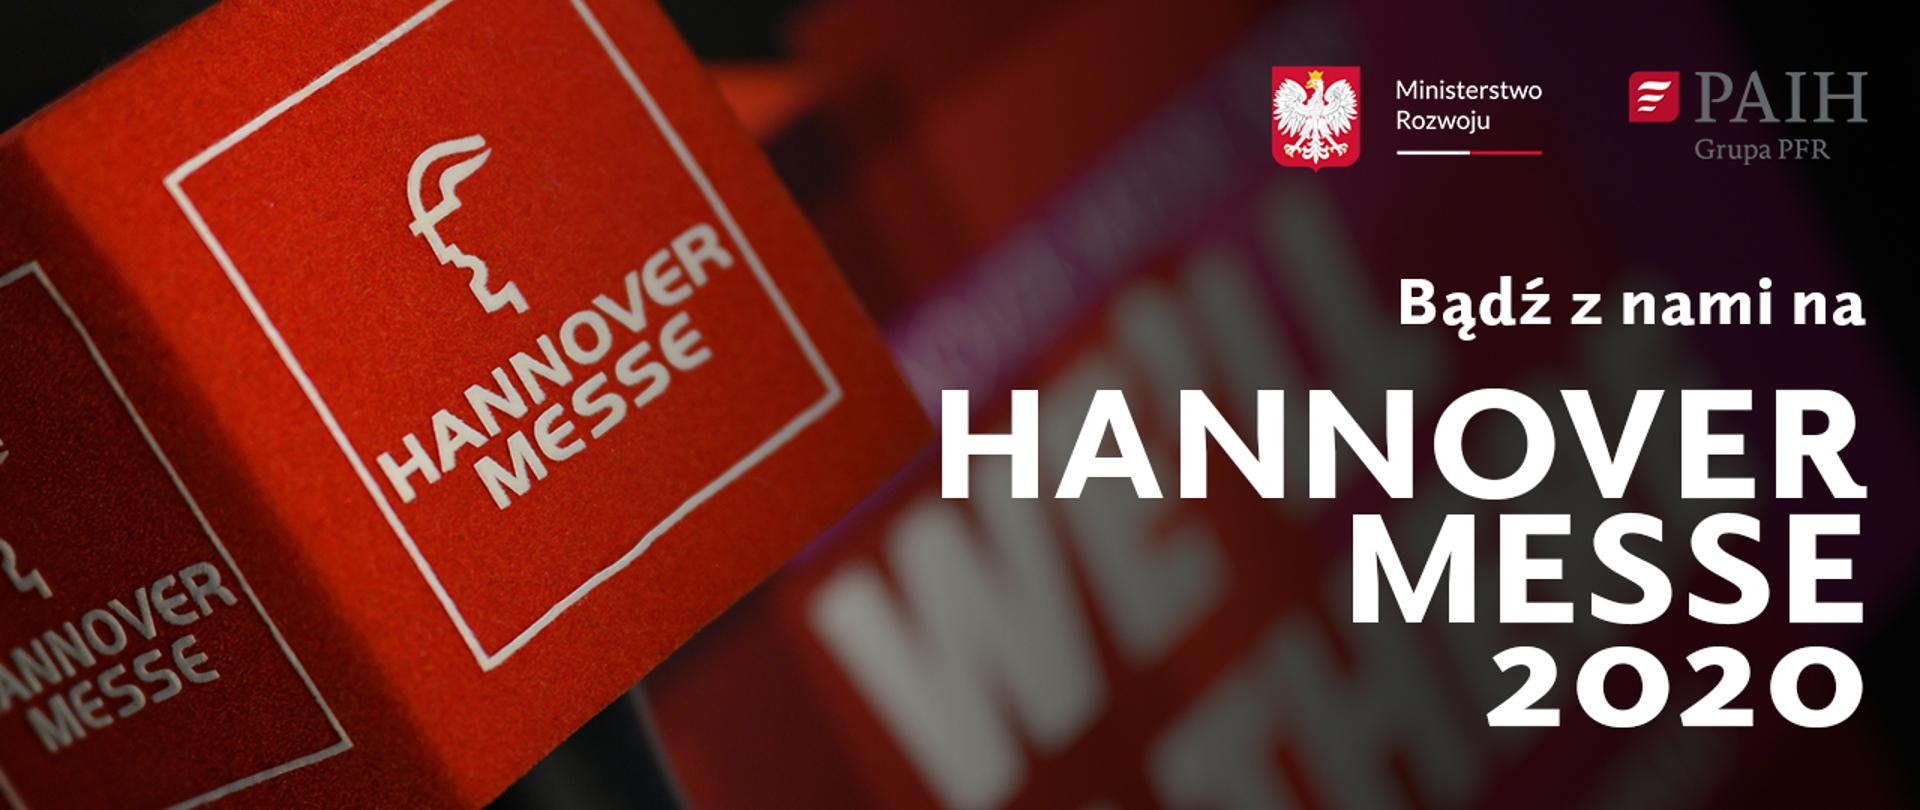 Grafika - mikrofon z logo targów, po prawej napis "Bądź z nami na Hannover Messe 2020".